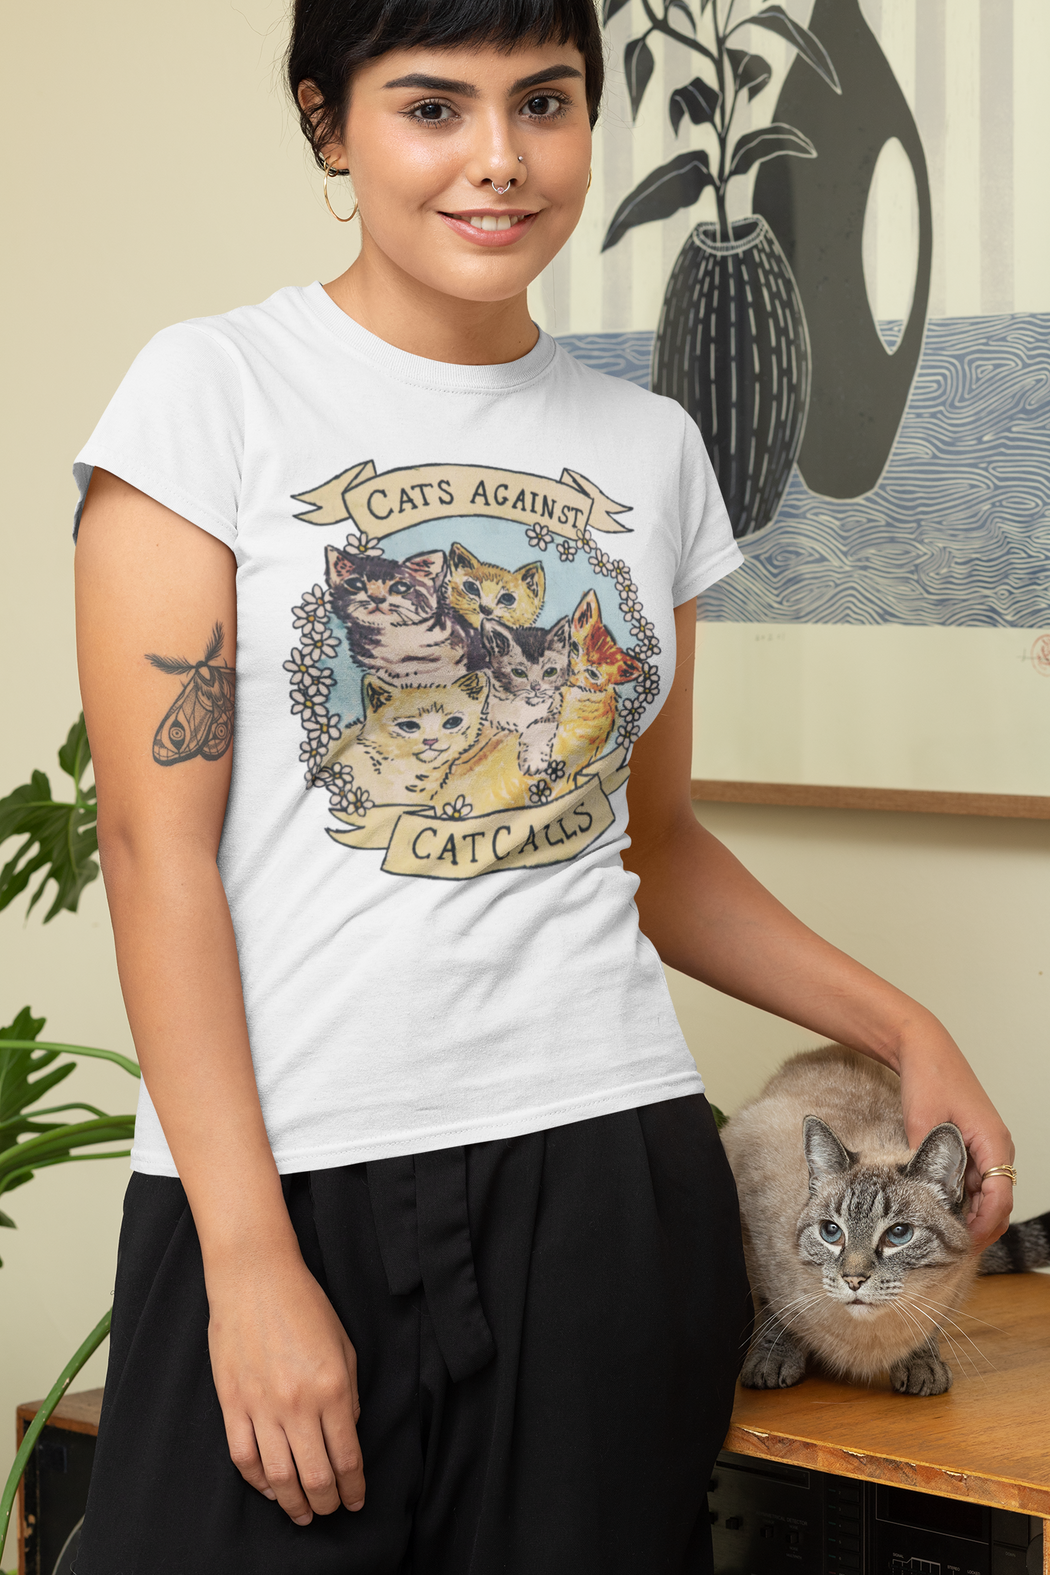 Cats Against Catcalls -- Women's T-Shirt